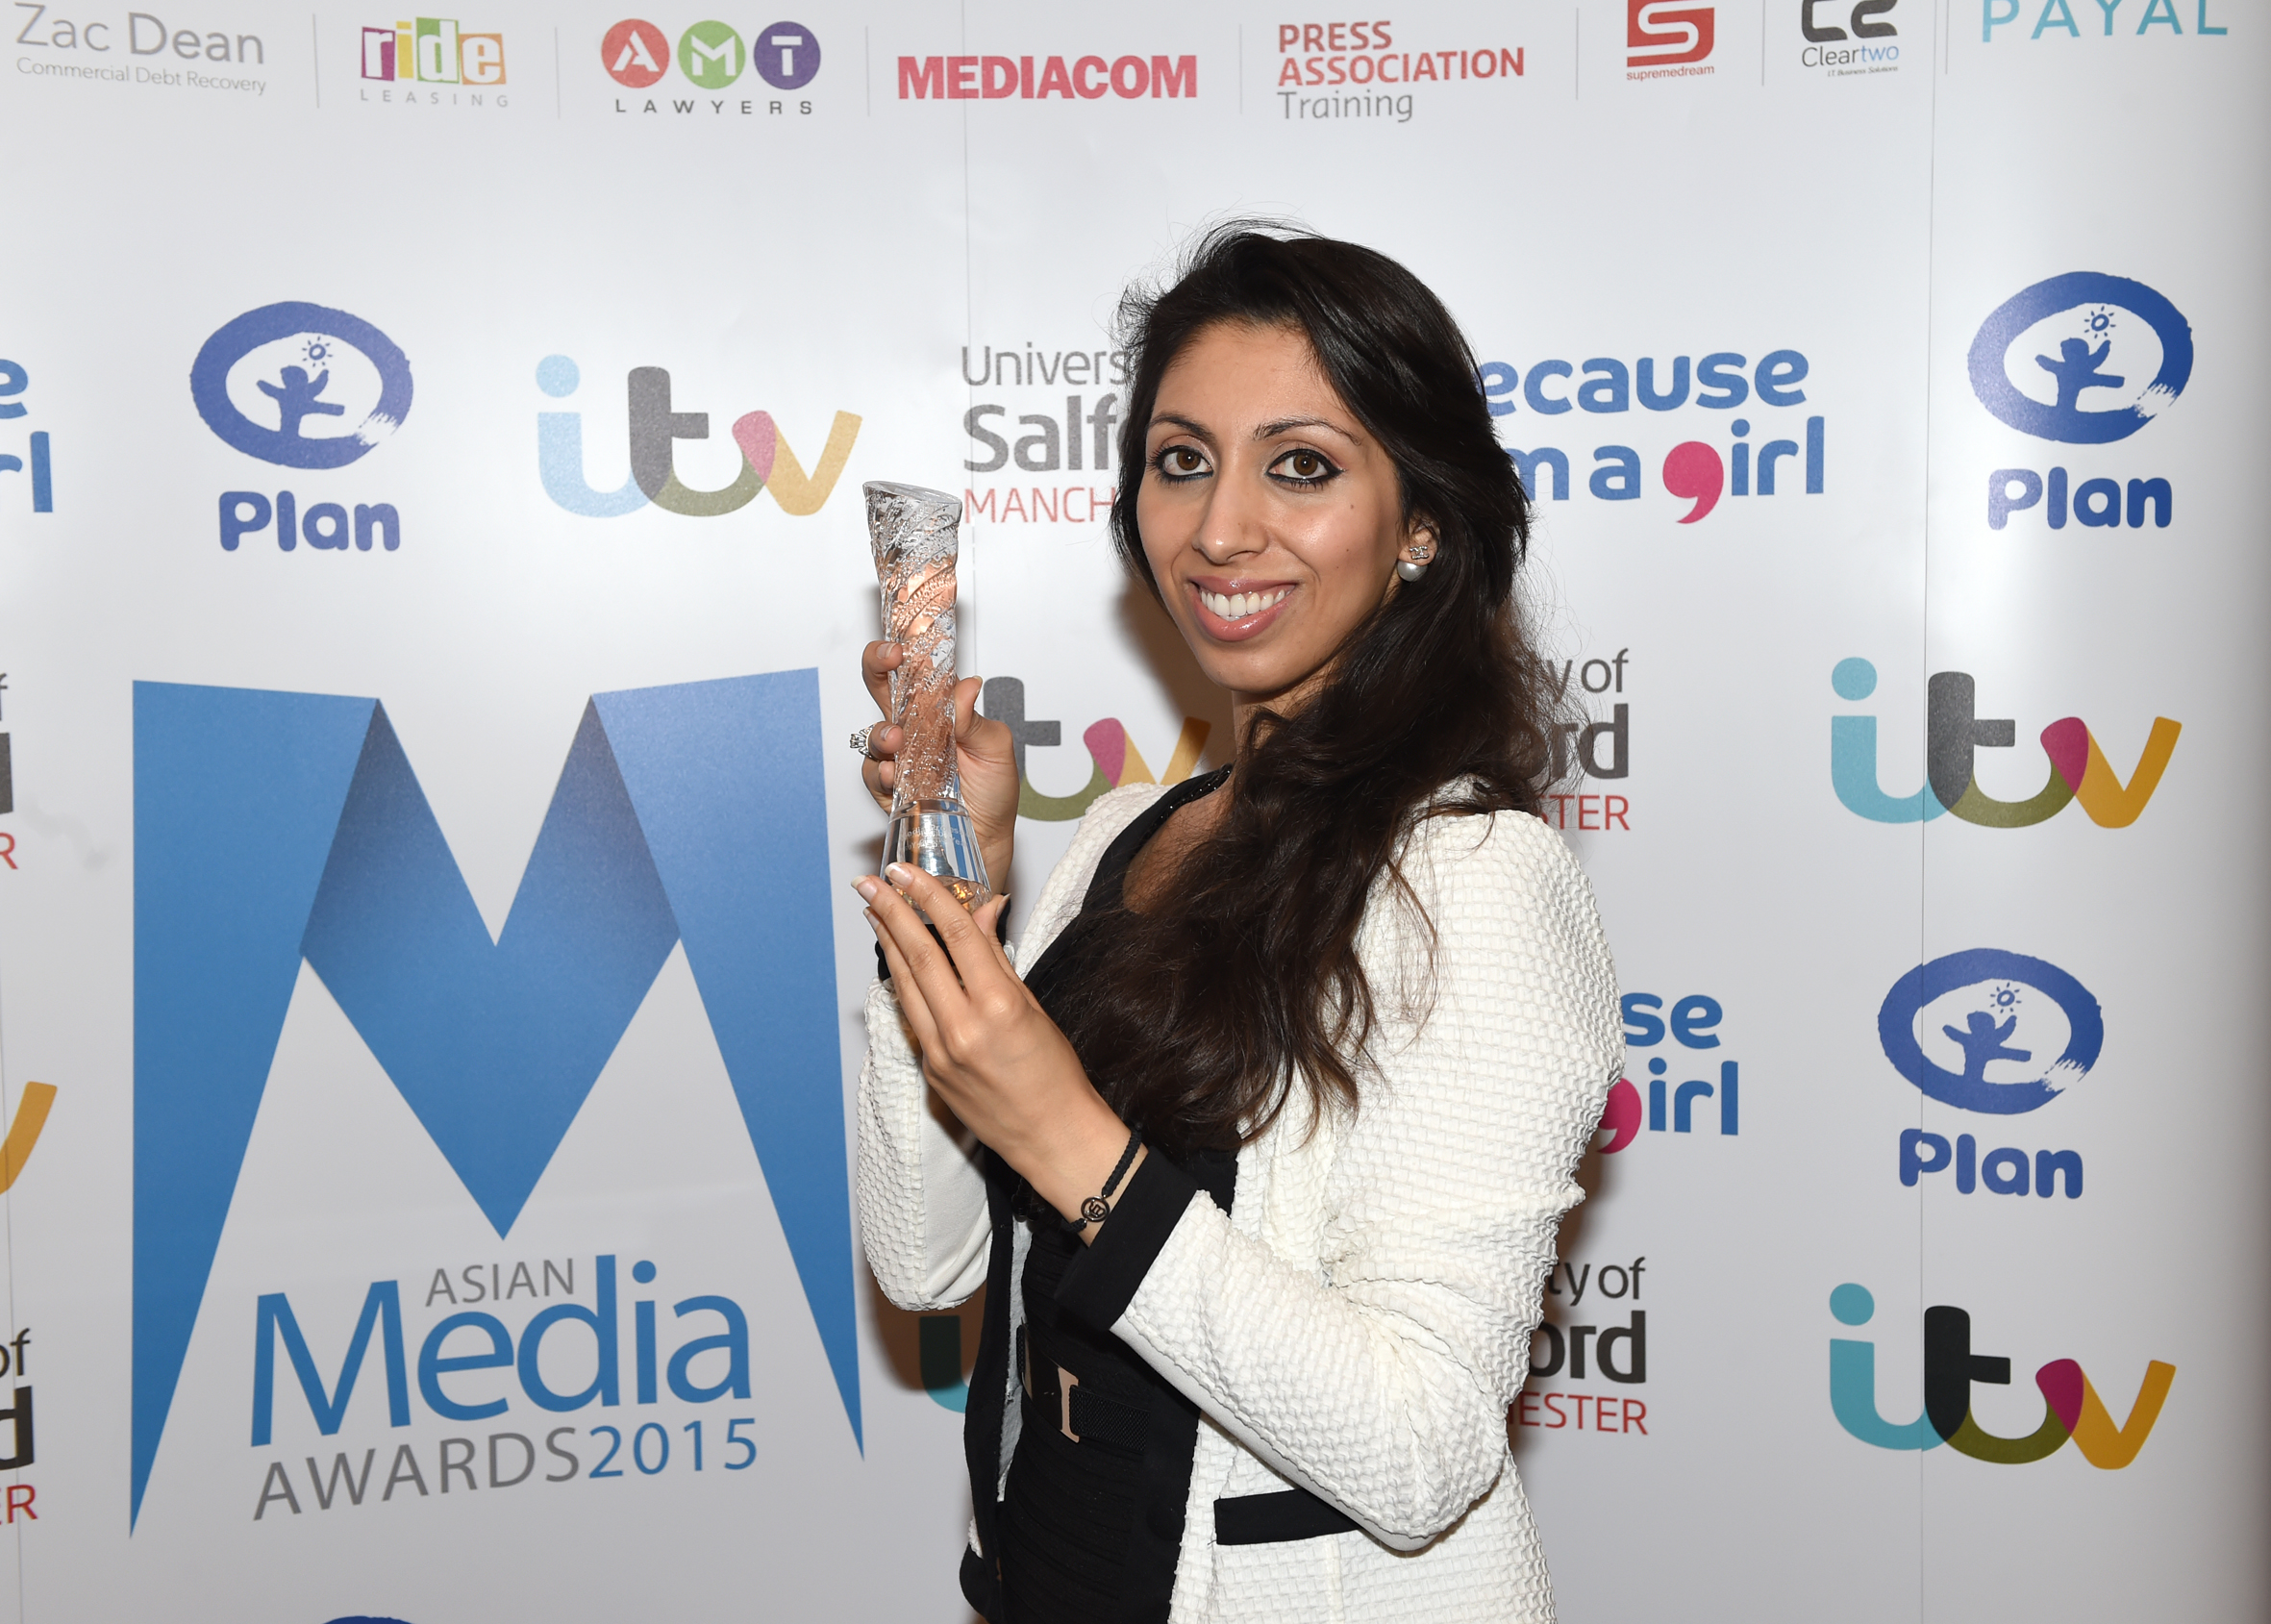 Natasha Mudhar Named Media Professional of the Year